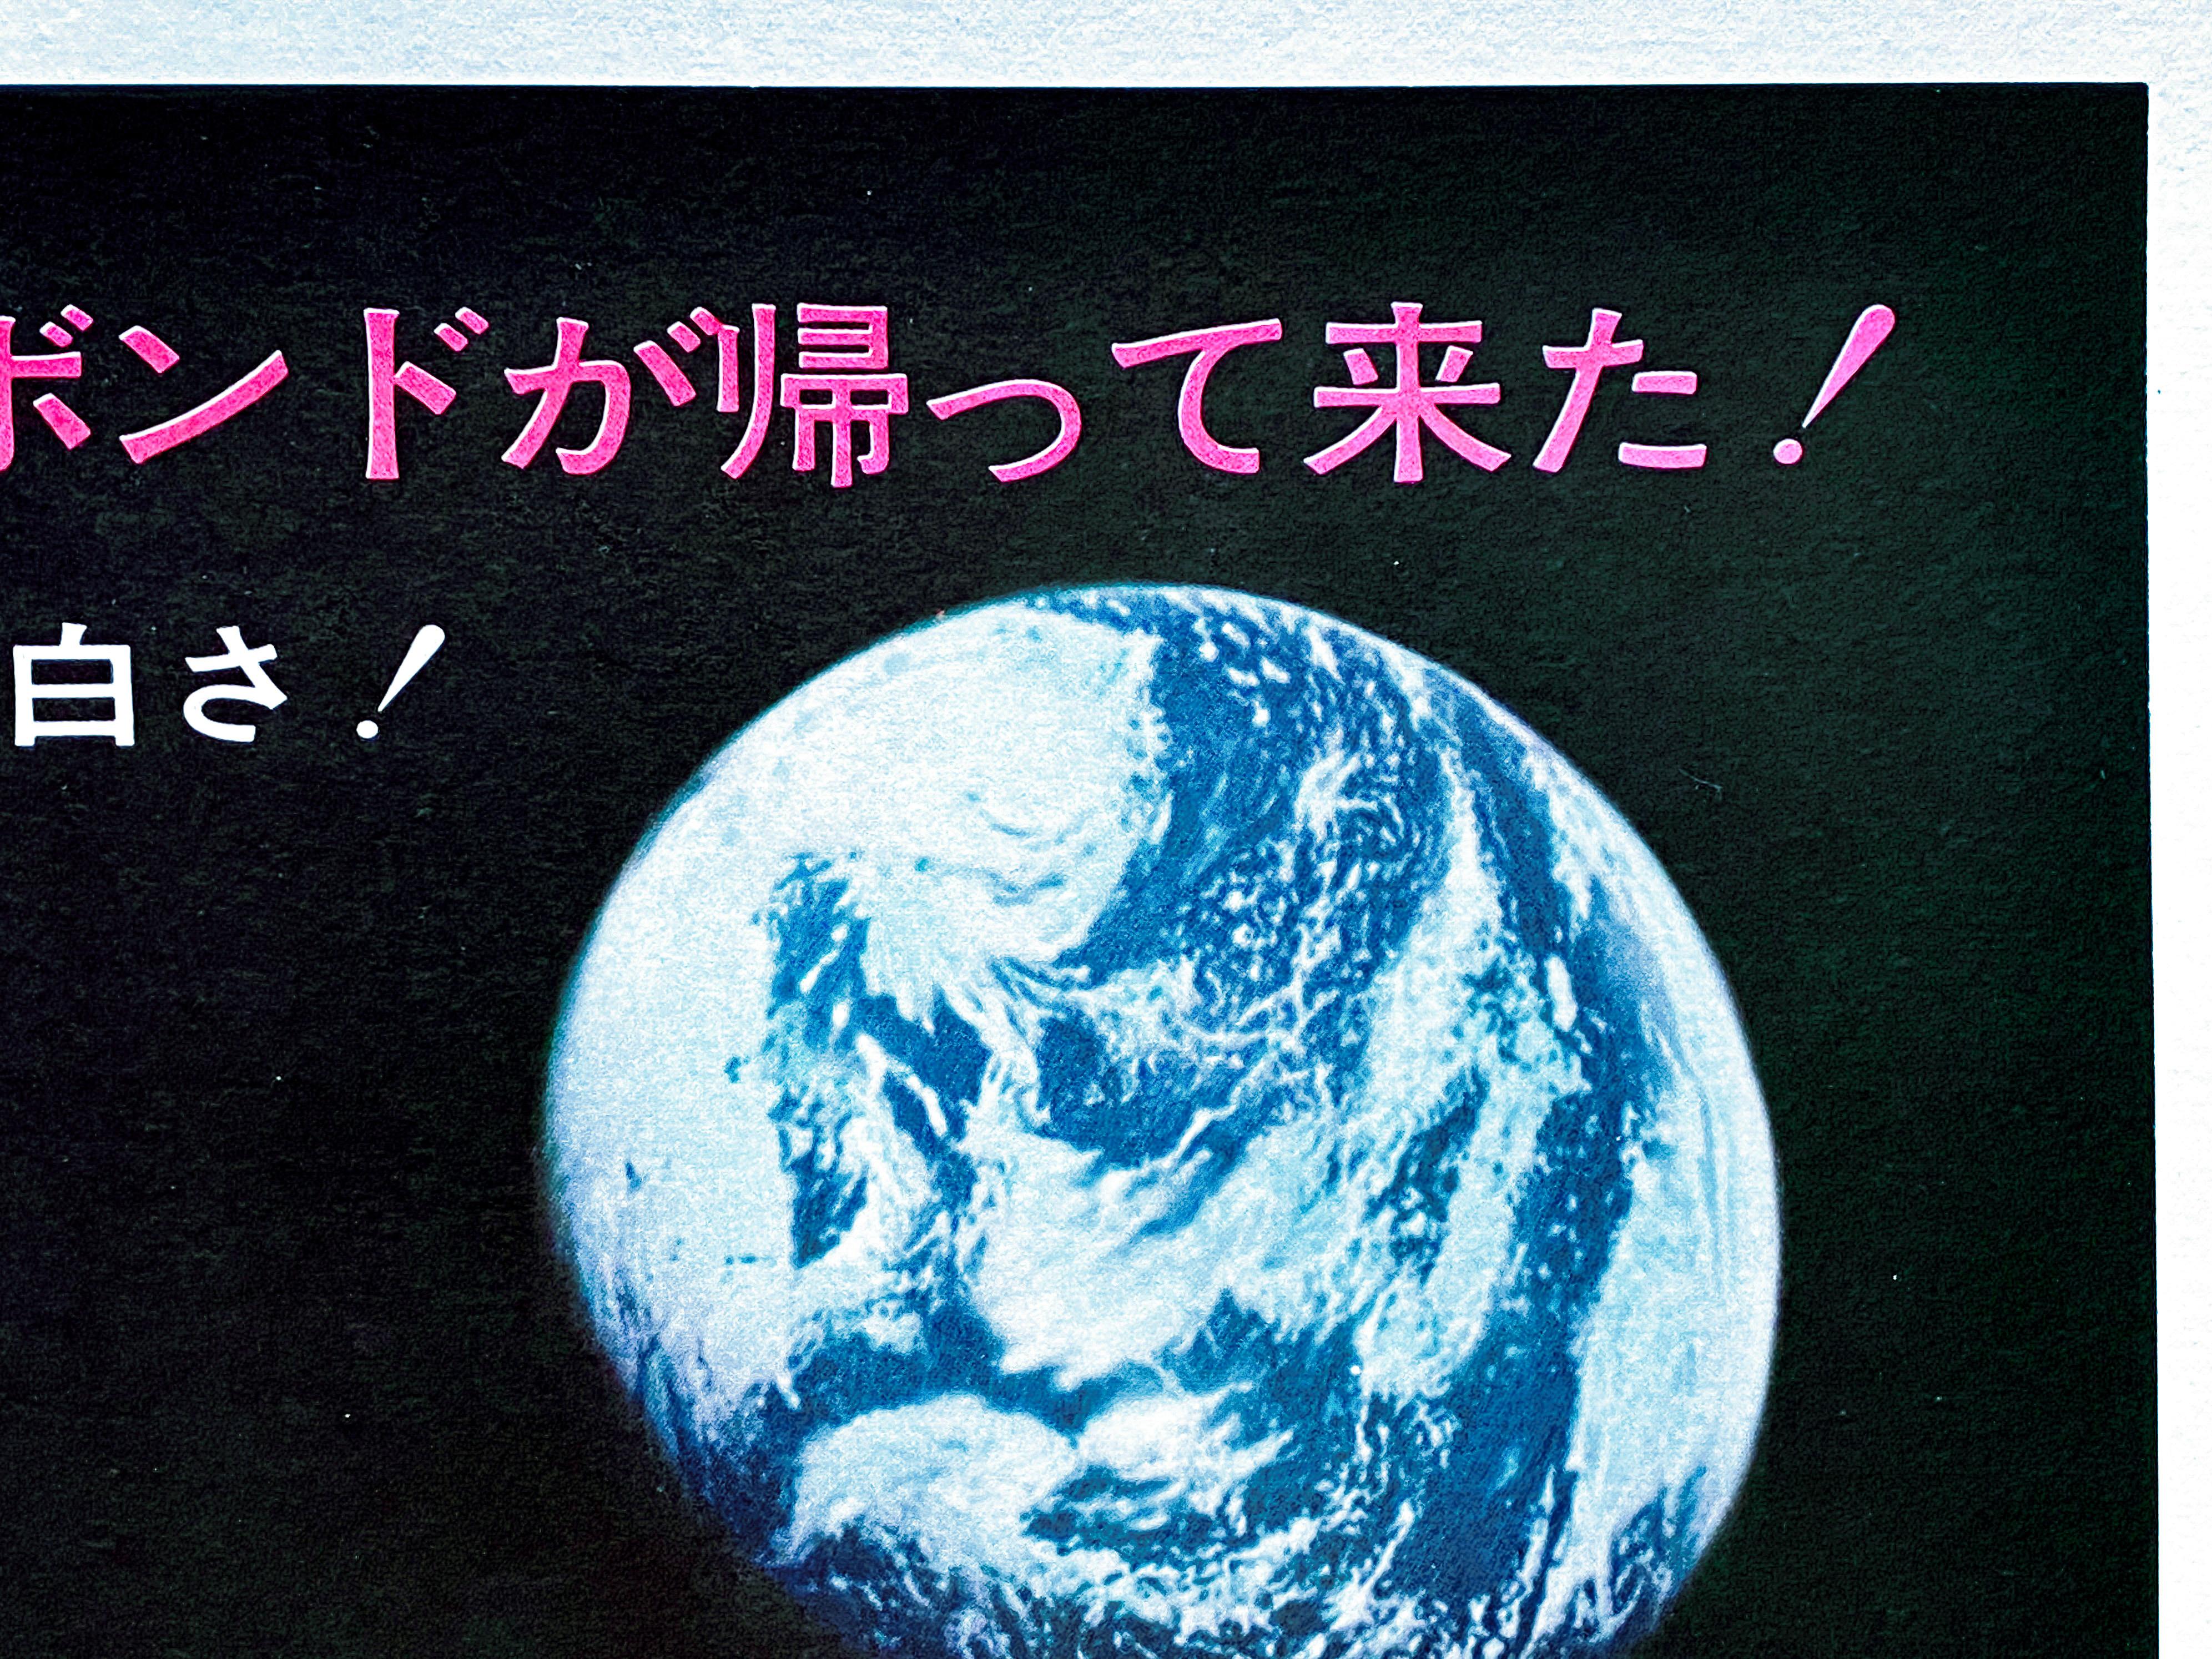 James Bond 'Diamonds Are Forever' Original Vintage Japanese Movie Poster, 1971 For Sale 2